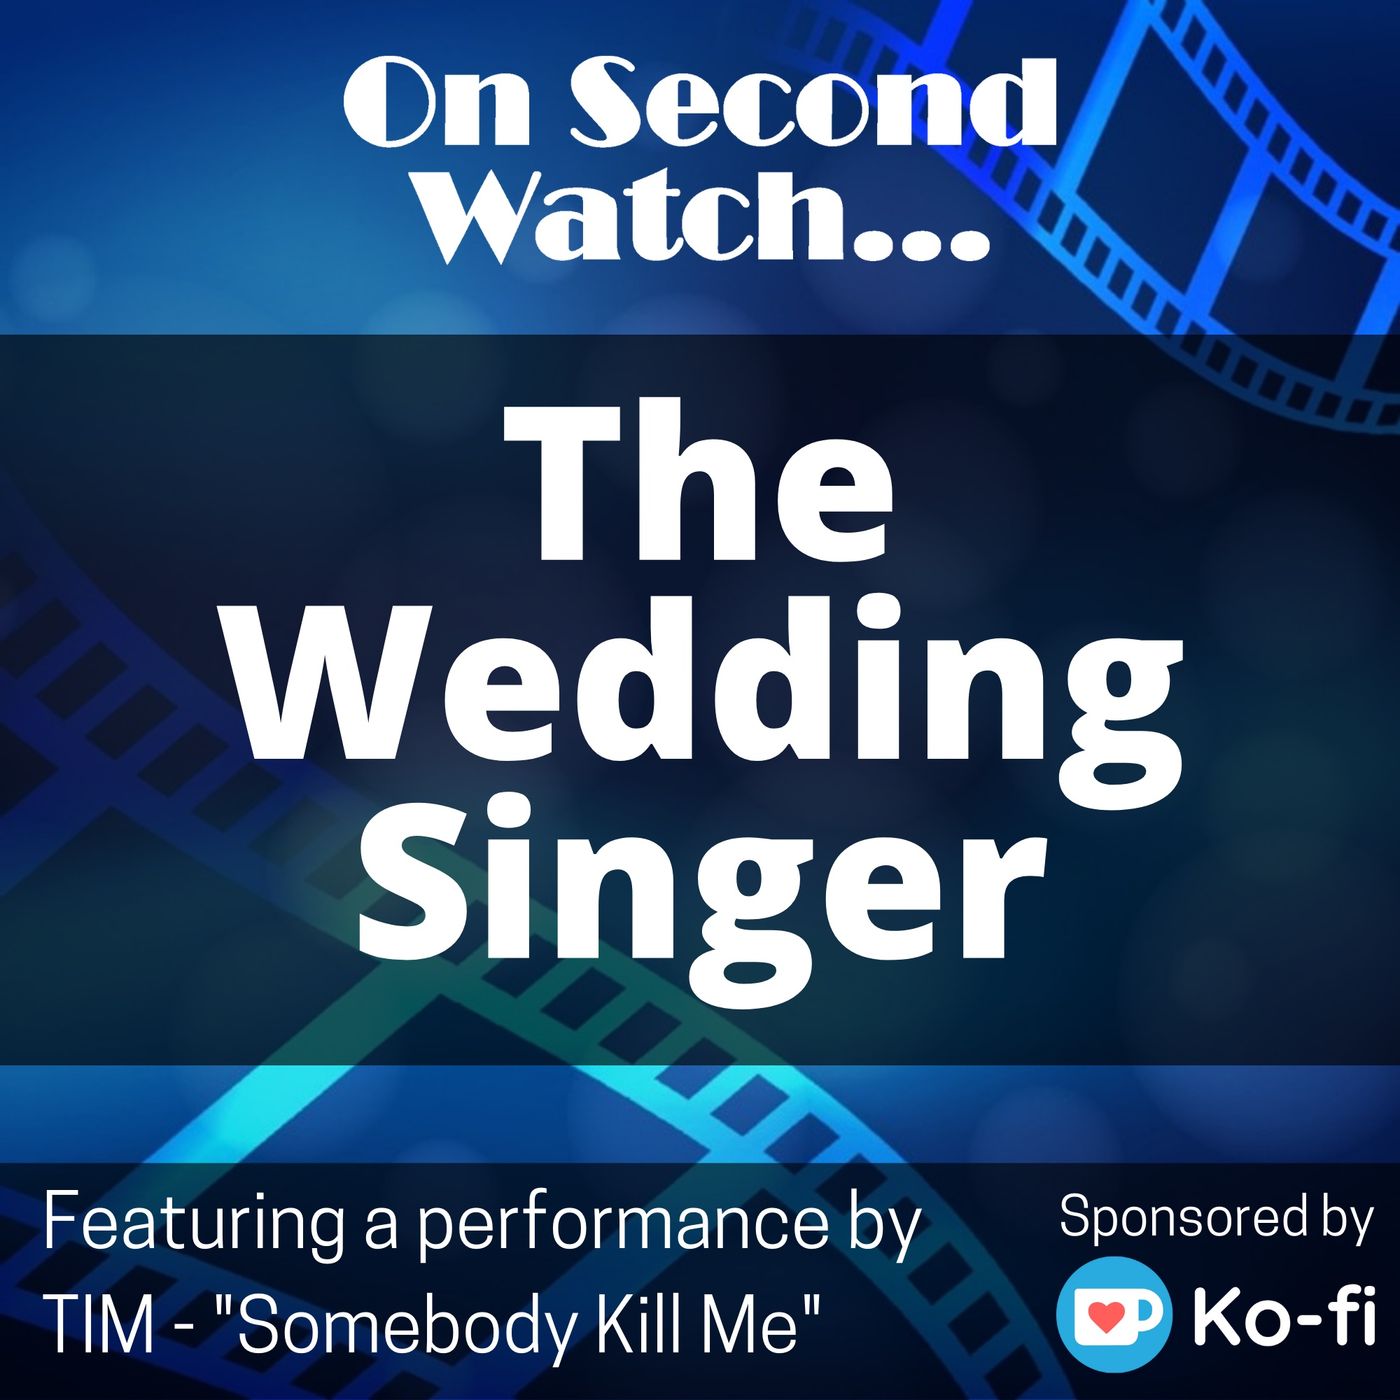 The Wedding Singer (1998) - "Somebody Kill Me Please" Image